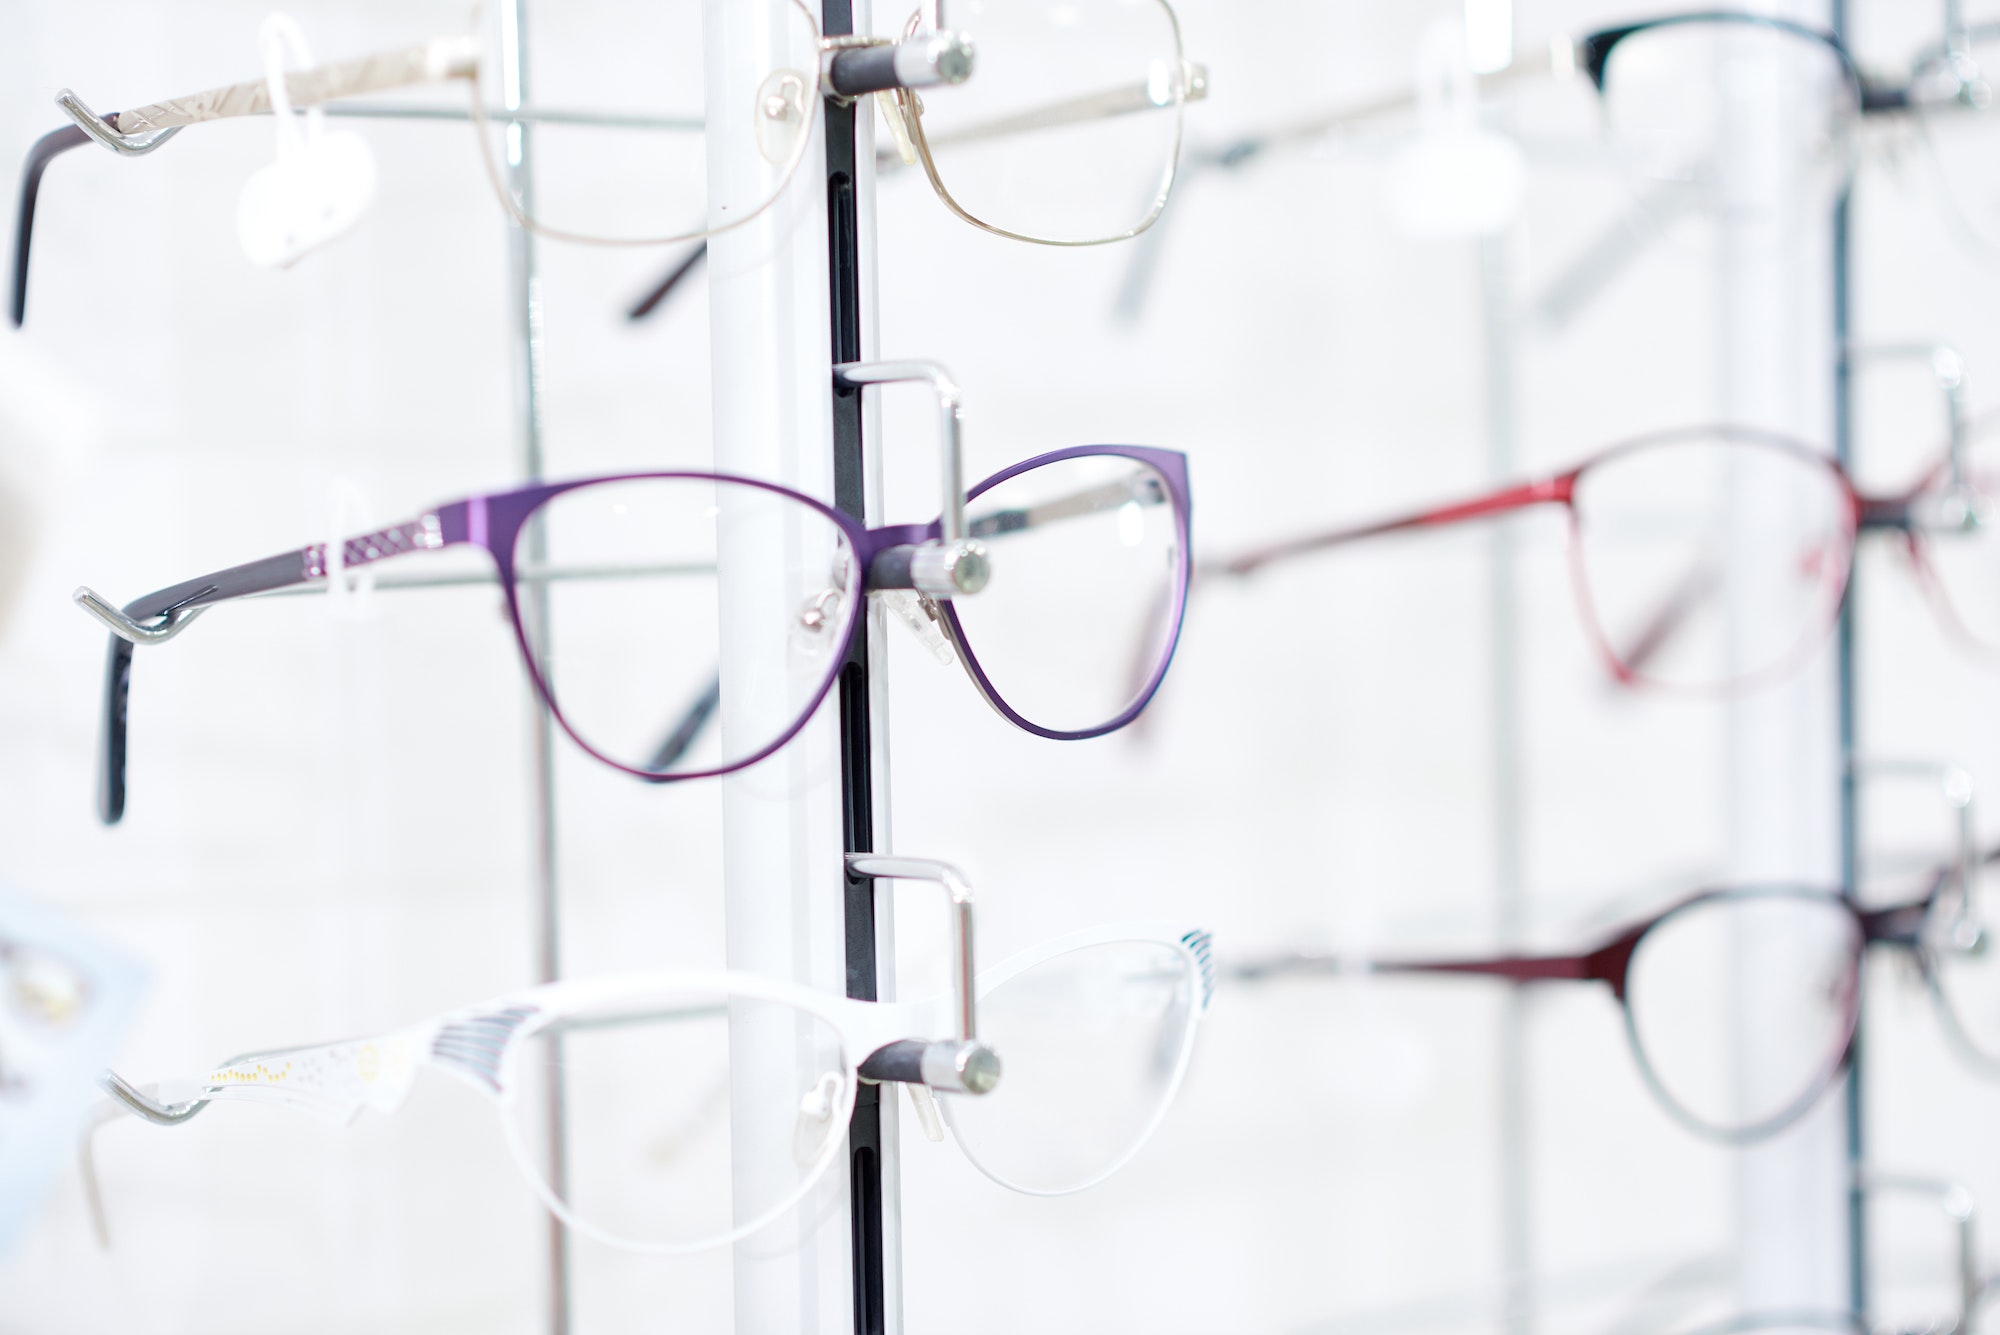 Fashionable eyeglasses in fashionable frame